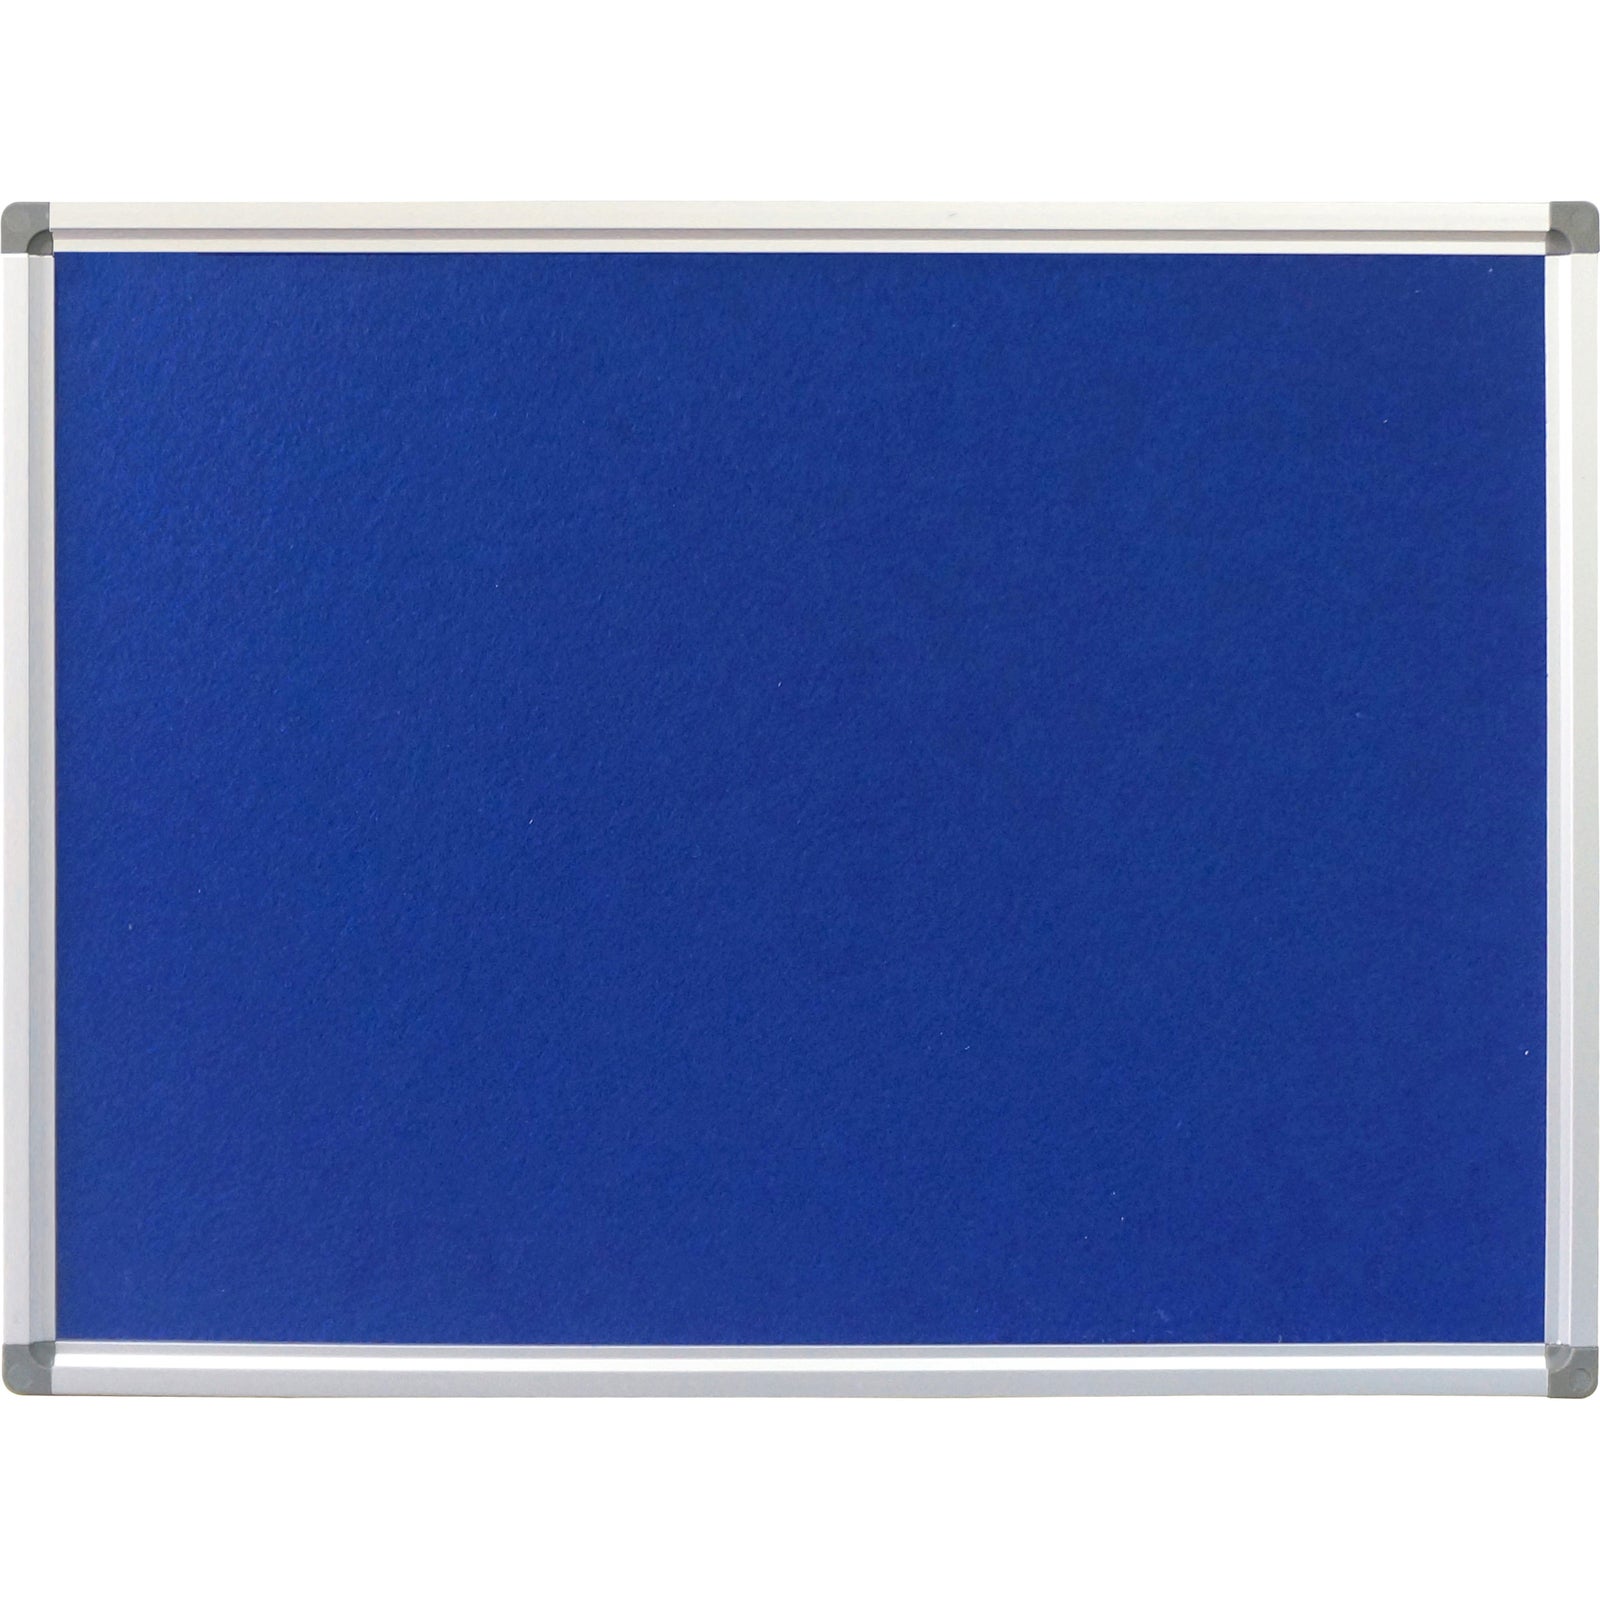 RAPIDLINE PINBOARD W1200mm x D15mm x H900mm Blue